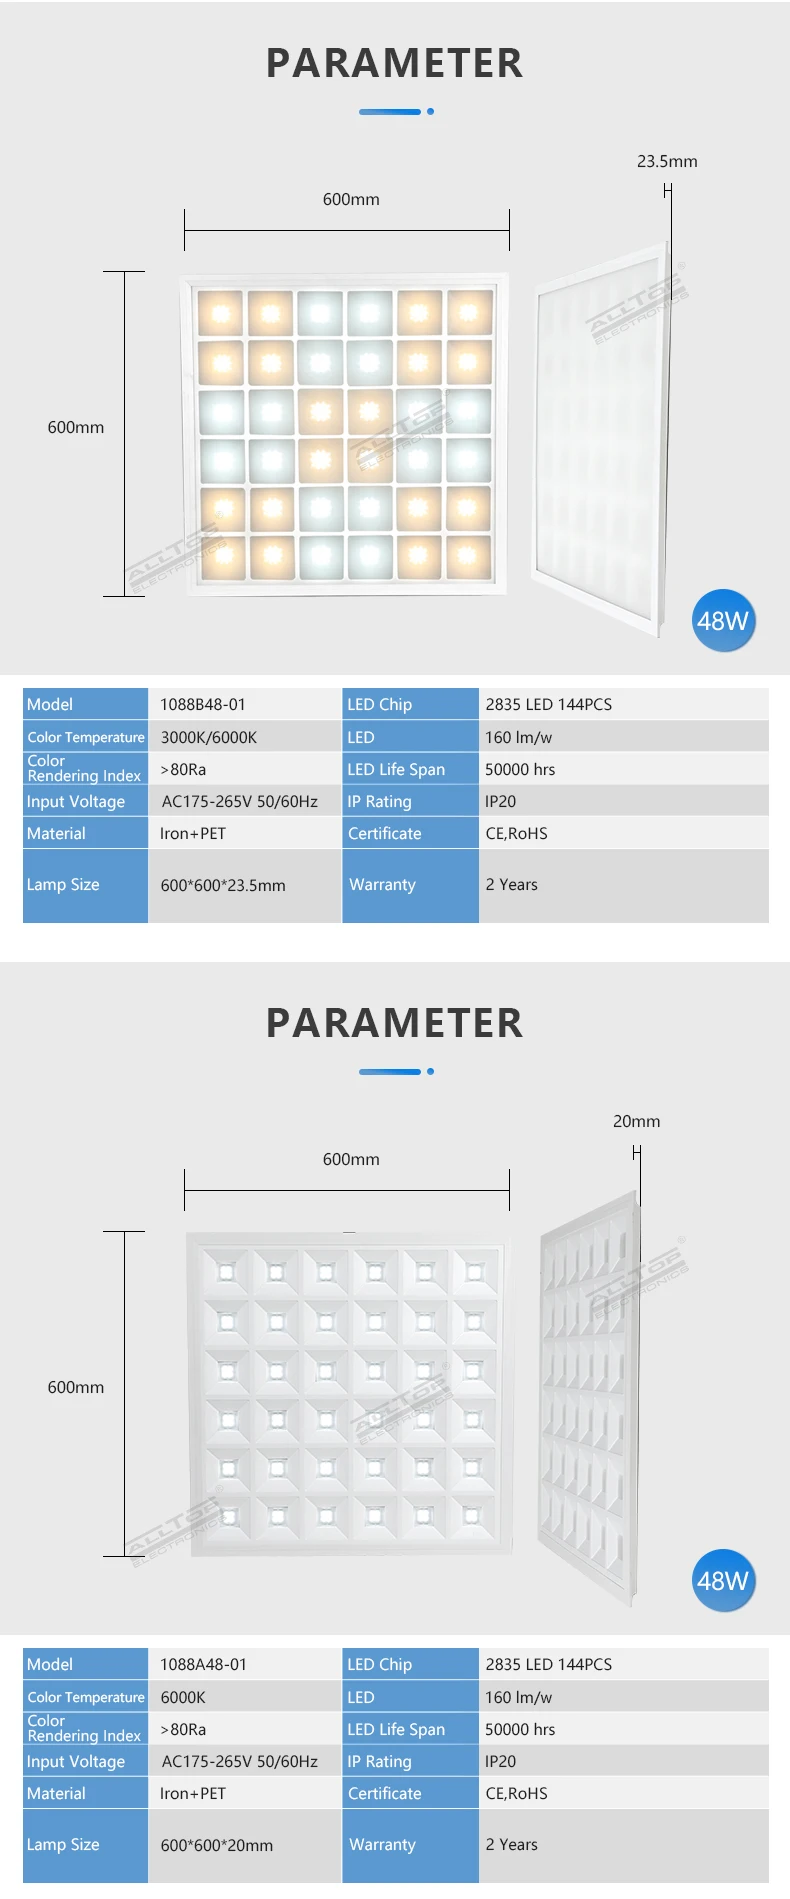 ALLTOP 2020 New Design 600x600 Slim Indoor Office Home Hospital Ceiling Lighting 48W Led Panel Light